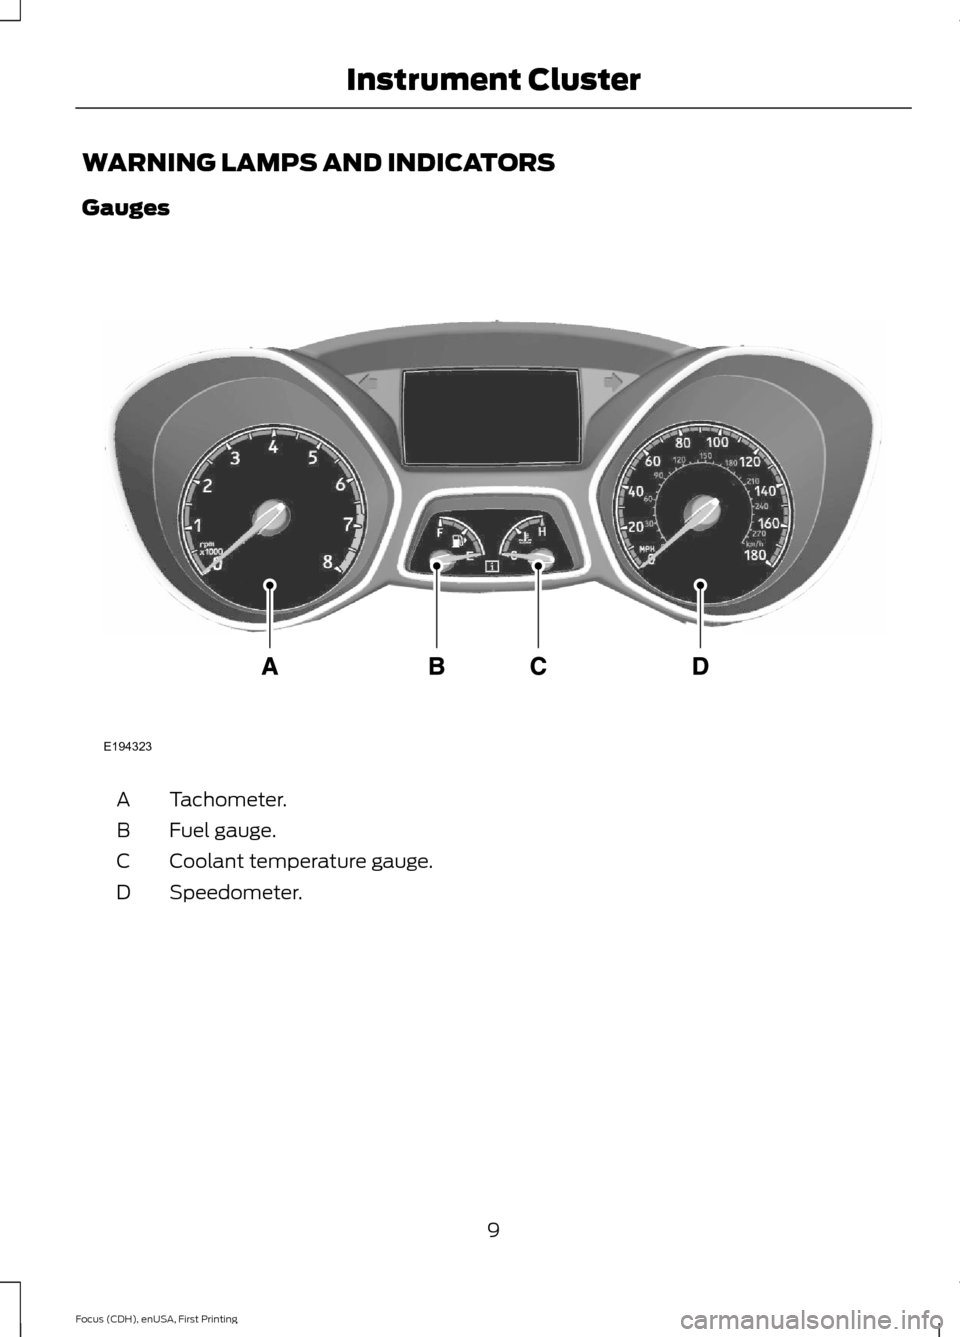 FORD FOCUS 2015 3.G ST Supplement Manual WARNING LAMPS AND INDICATORS
Gauges
Tachometer.A
Fuel gauge.B
Coolant temperature gauge.C
Speedometer.D
9Focus (CDH), enUSA, First PrintingInstrument ClusterE194323  